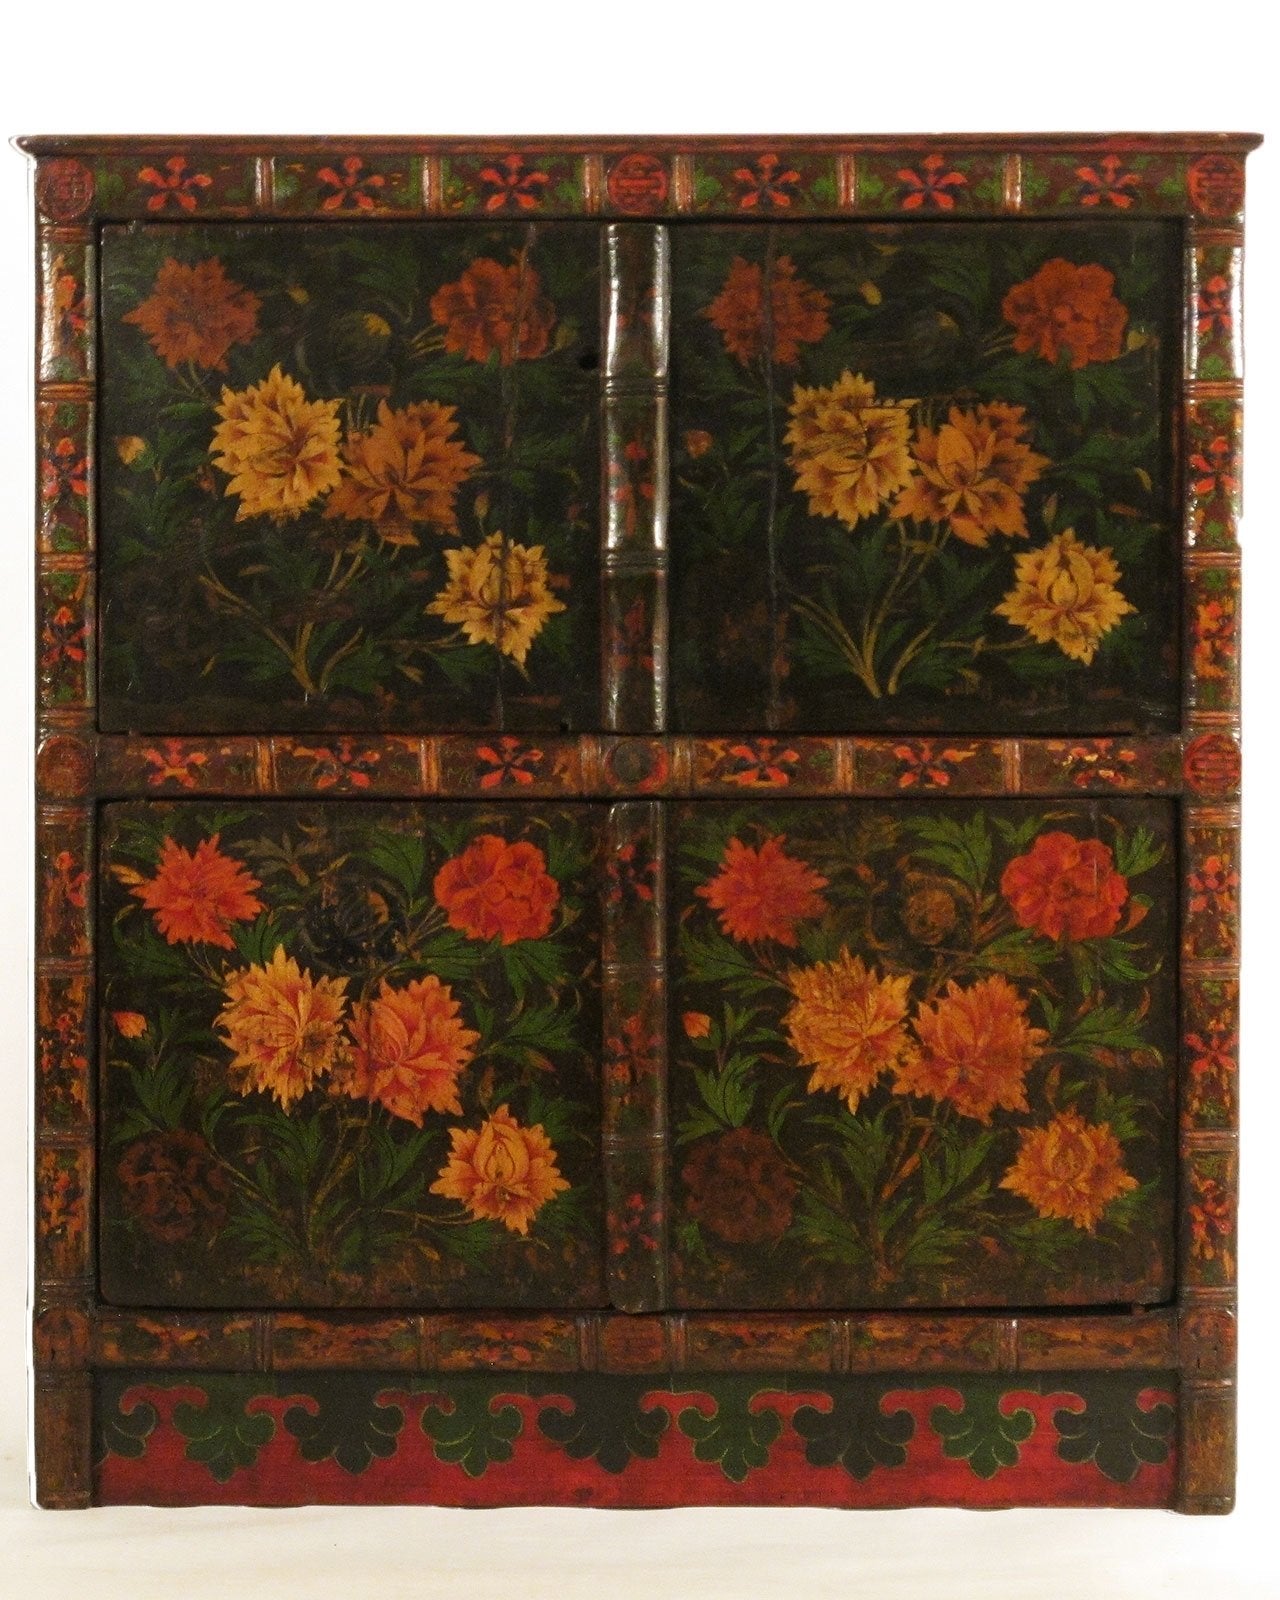 Tibetan Altar Cabinet With Original Painting - 19thC | Indigo Oriental Antiques